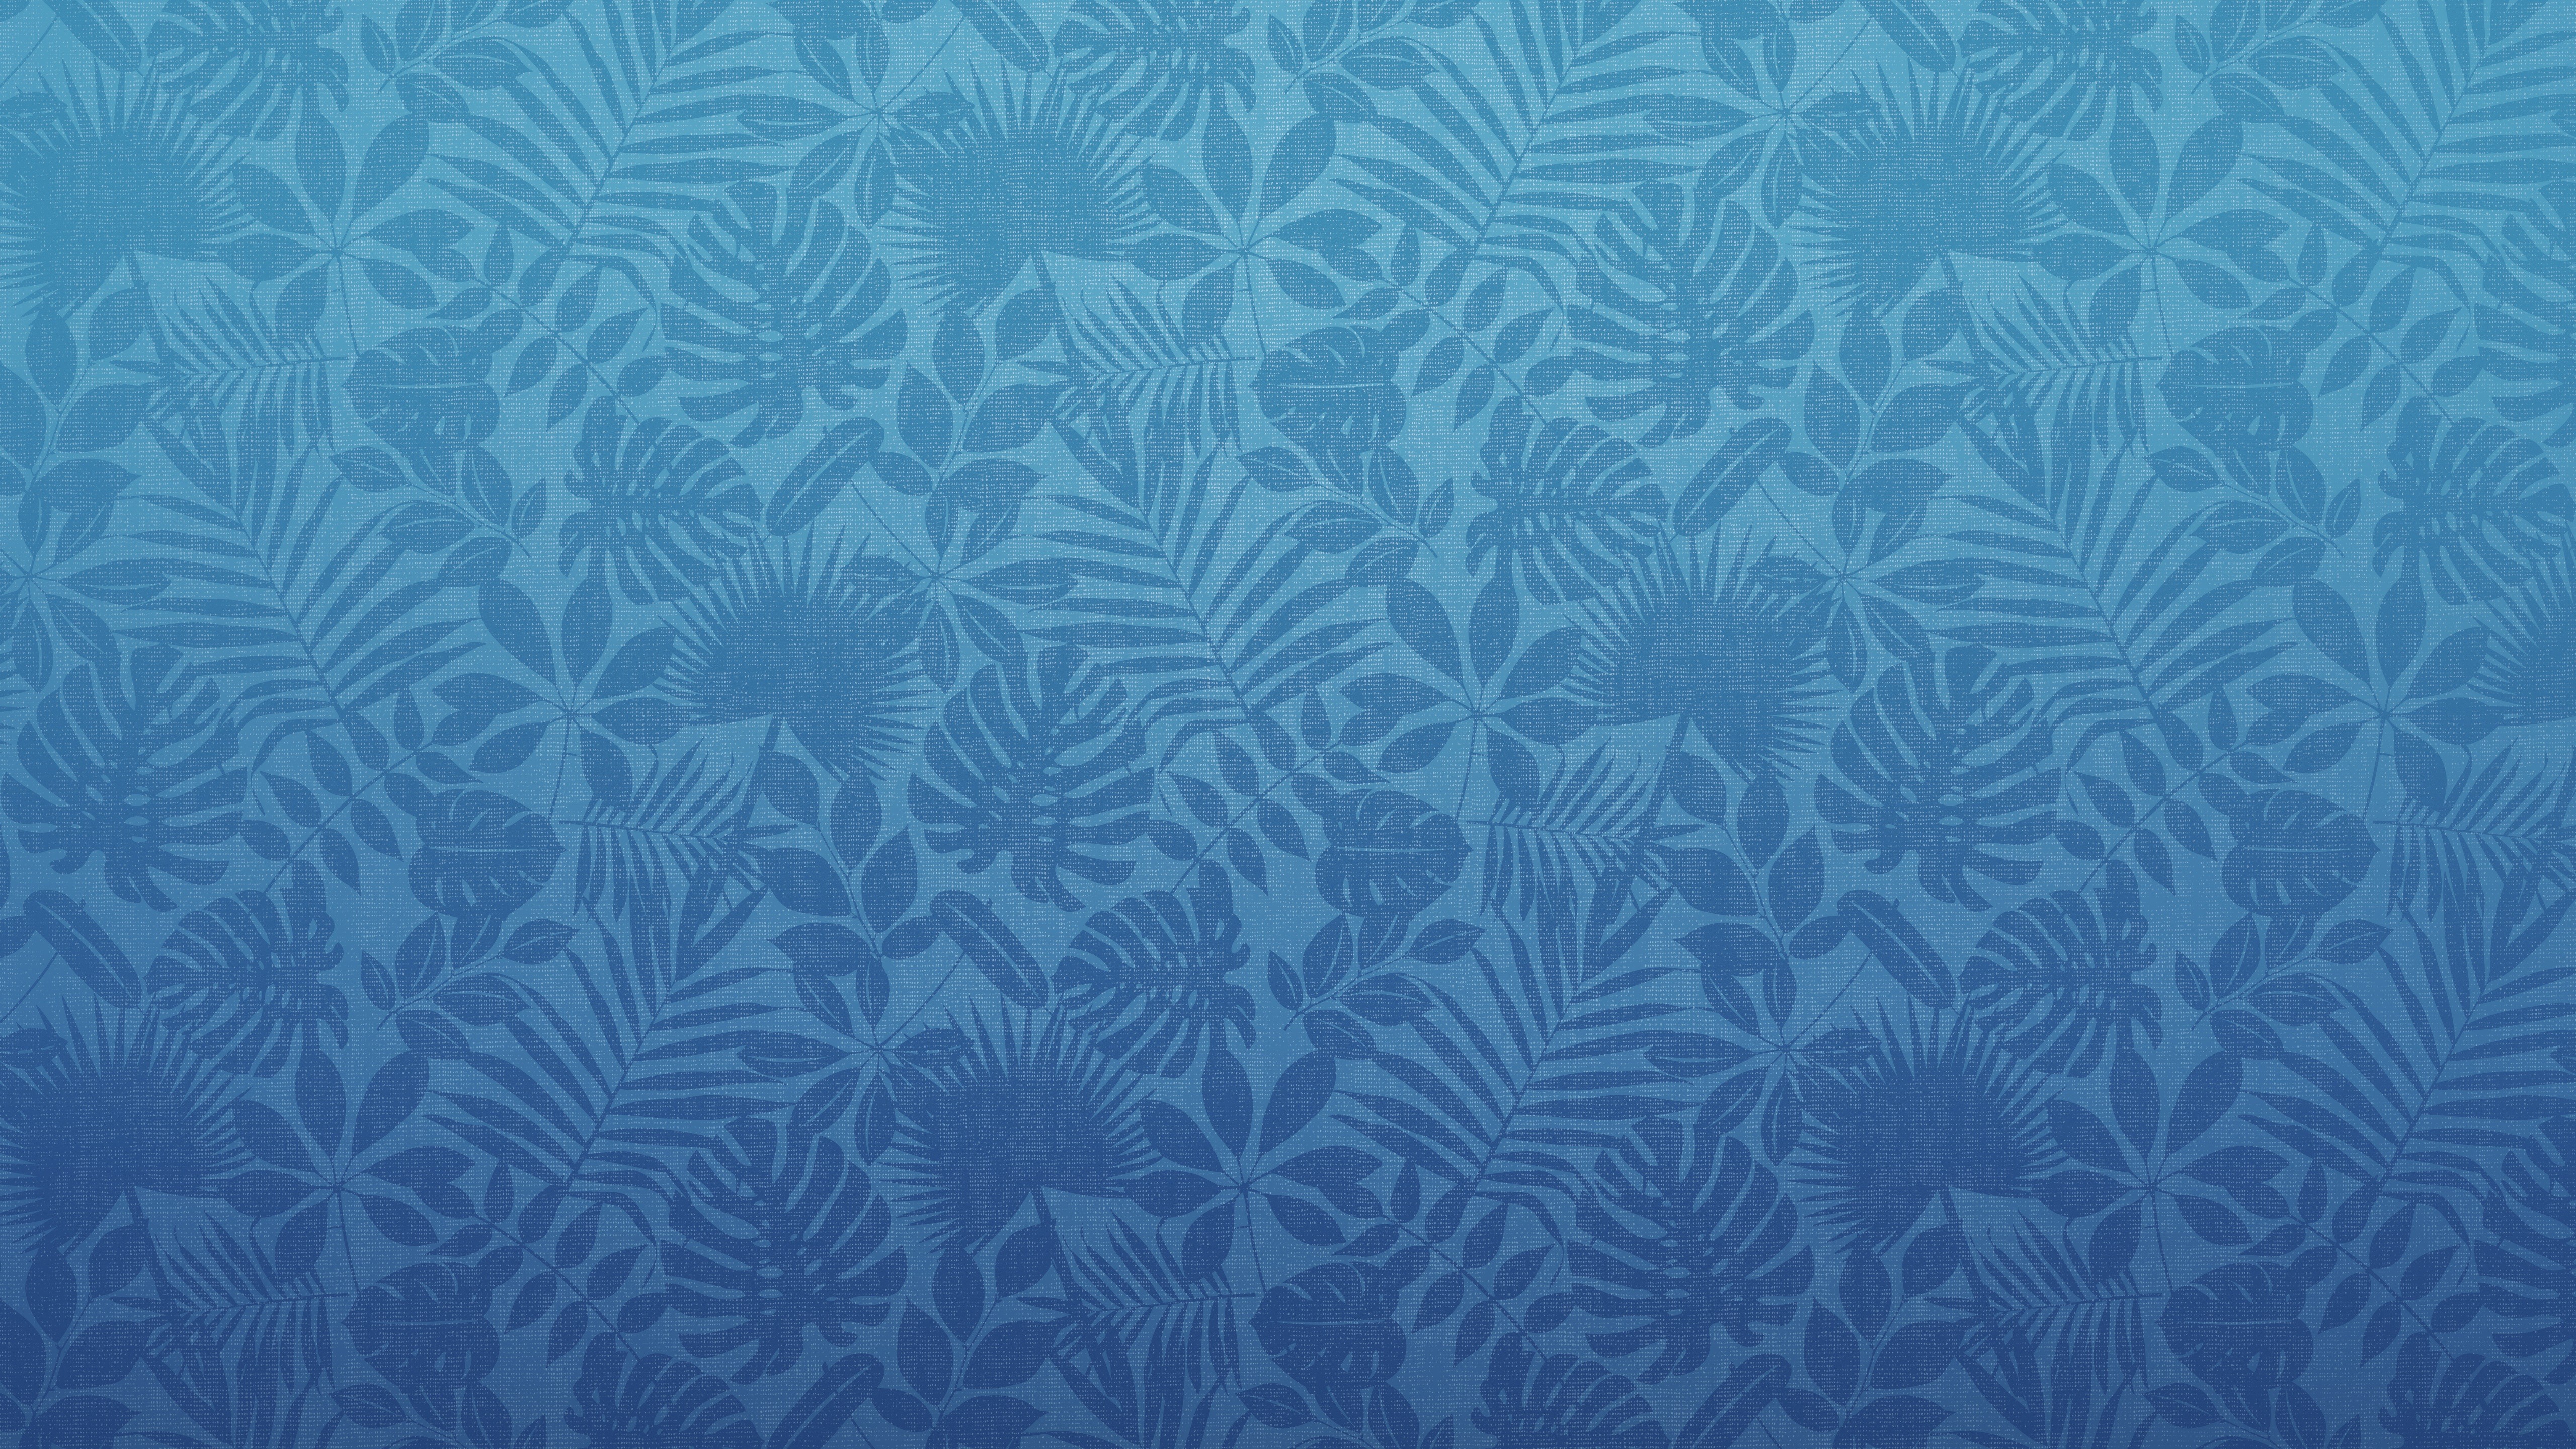 General 5120x2880 blue pattern texture artwork